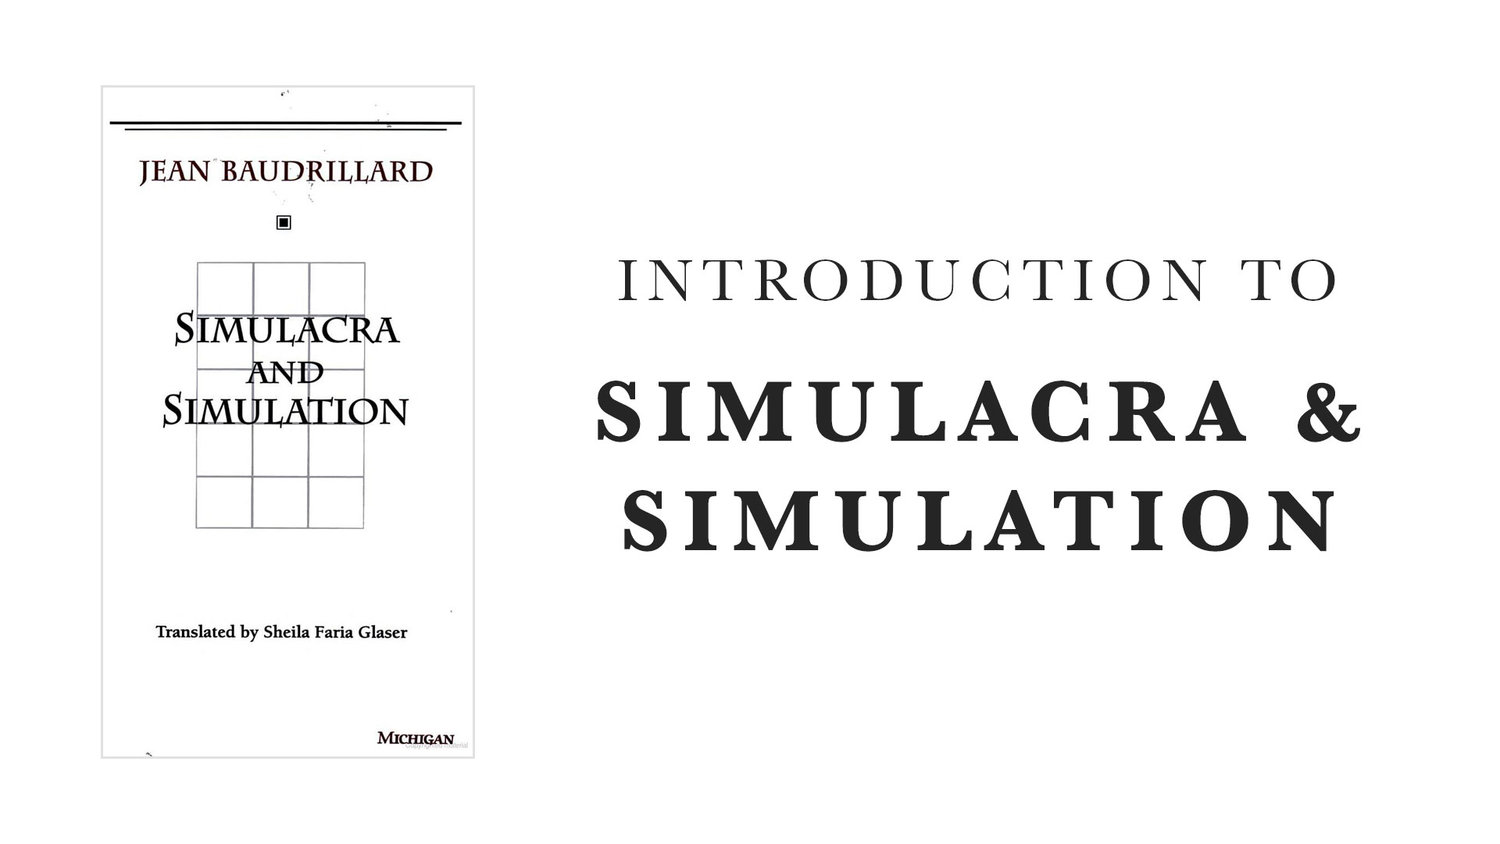 Jean Baudrillard: Simulacra and Simulation, Simulation and Simulacra